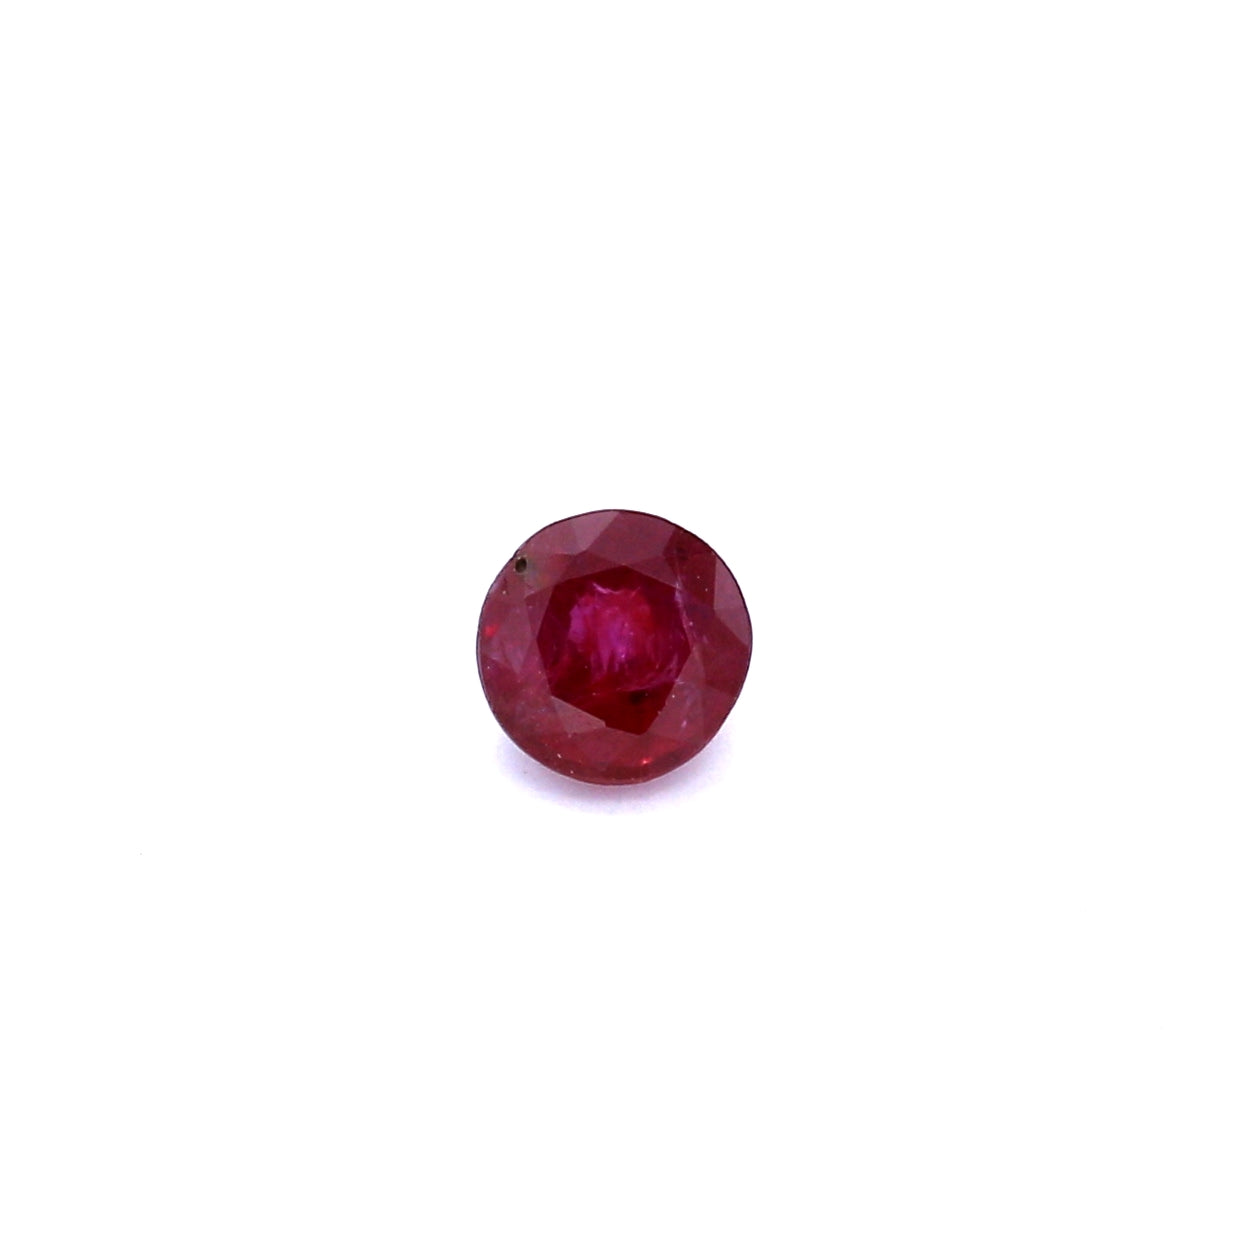 0.60ct Purplish Red, Round Ruby, No Heat, Thailand - 4.74 - 4.83 x 3.11mm